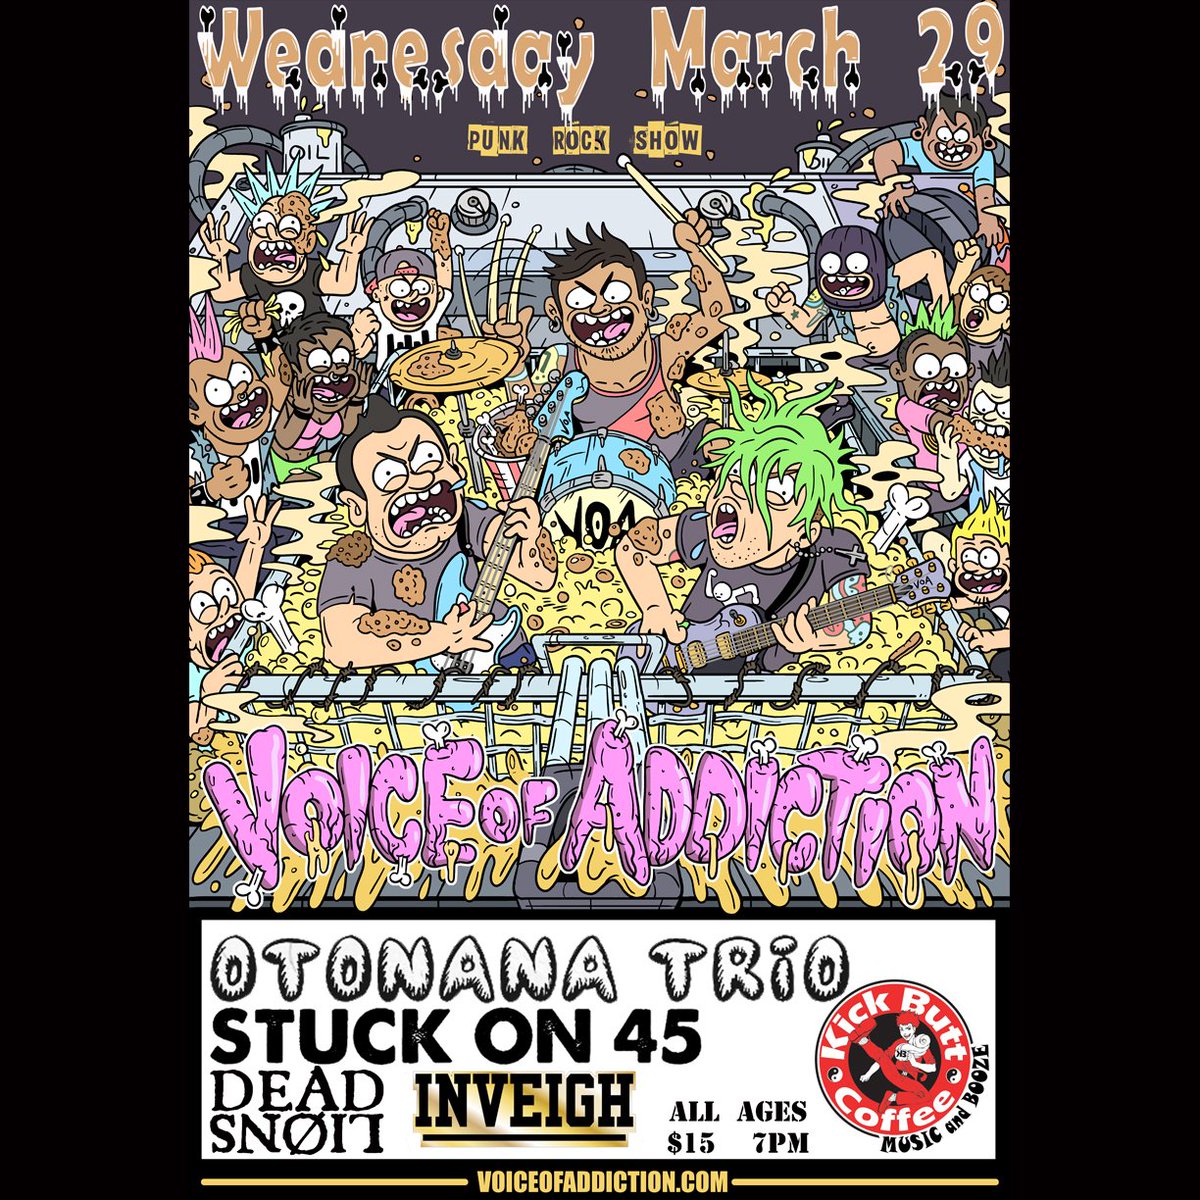 TONIGHT! AUSTIN TX #AllAges @VOArockers (chicago) @OtonanaTrio (japan) @Stuckon45 #DeadLions #Inveigh at @KickButtCoffee facebook.com/events/1378759… #punk #VoiceOfAddiction #Chicagopunk #punkrock #VOA #DIY #FYP #DeepFried #DirtyDive #Tour #DDDfriedtour